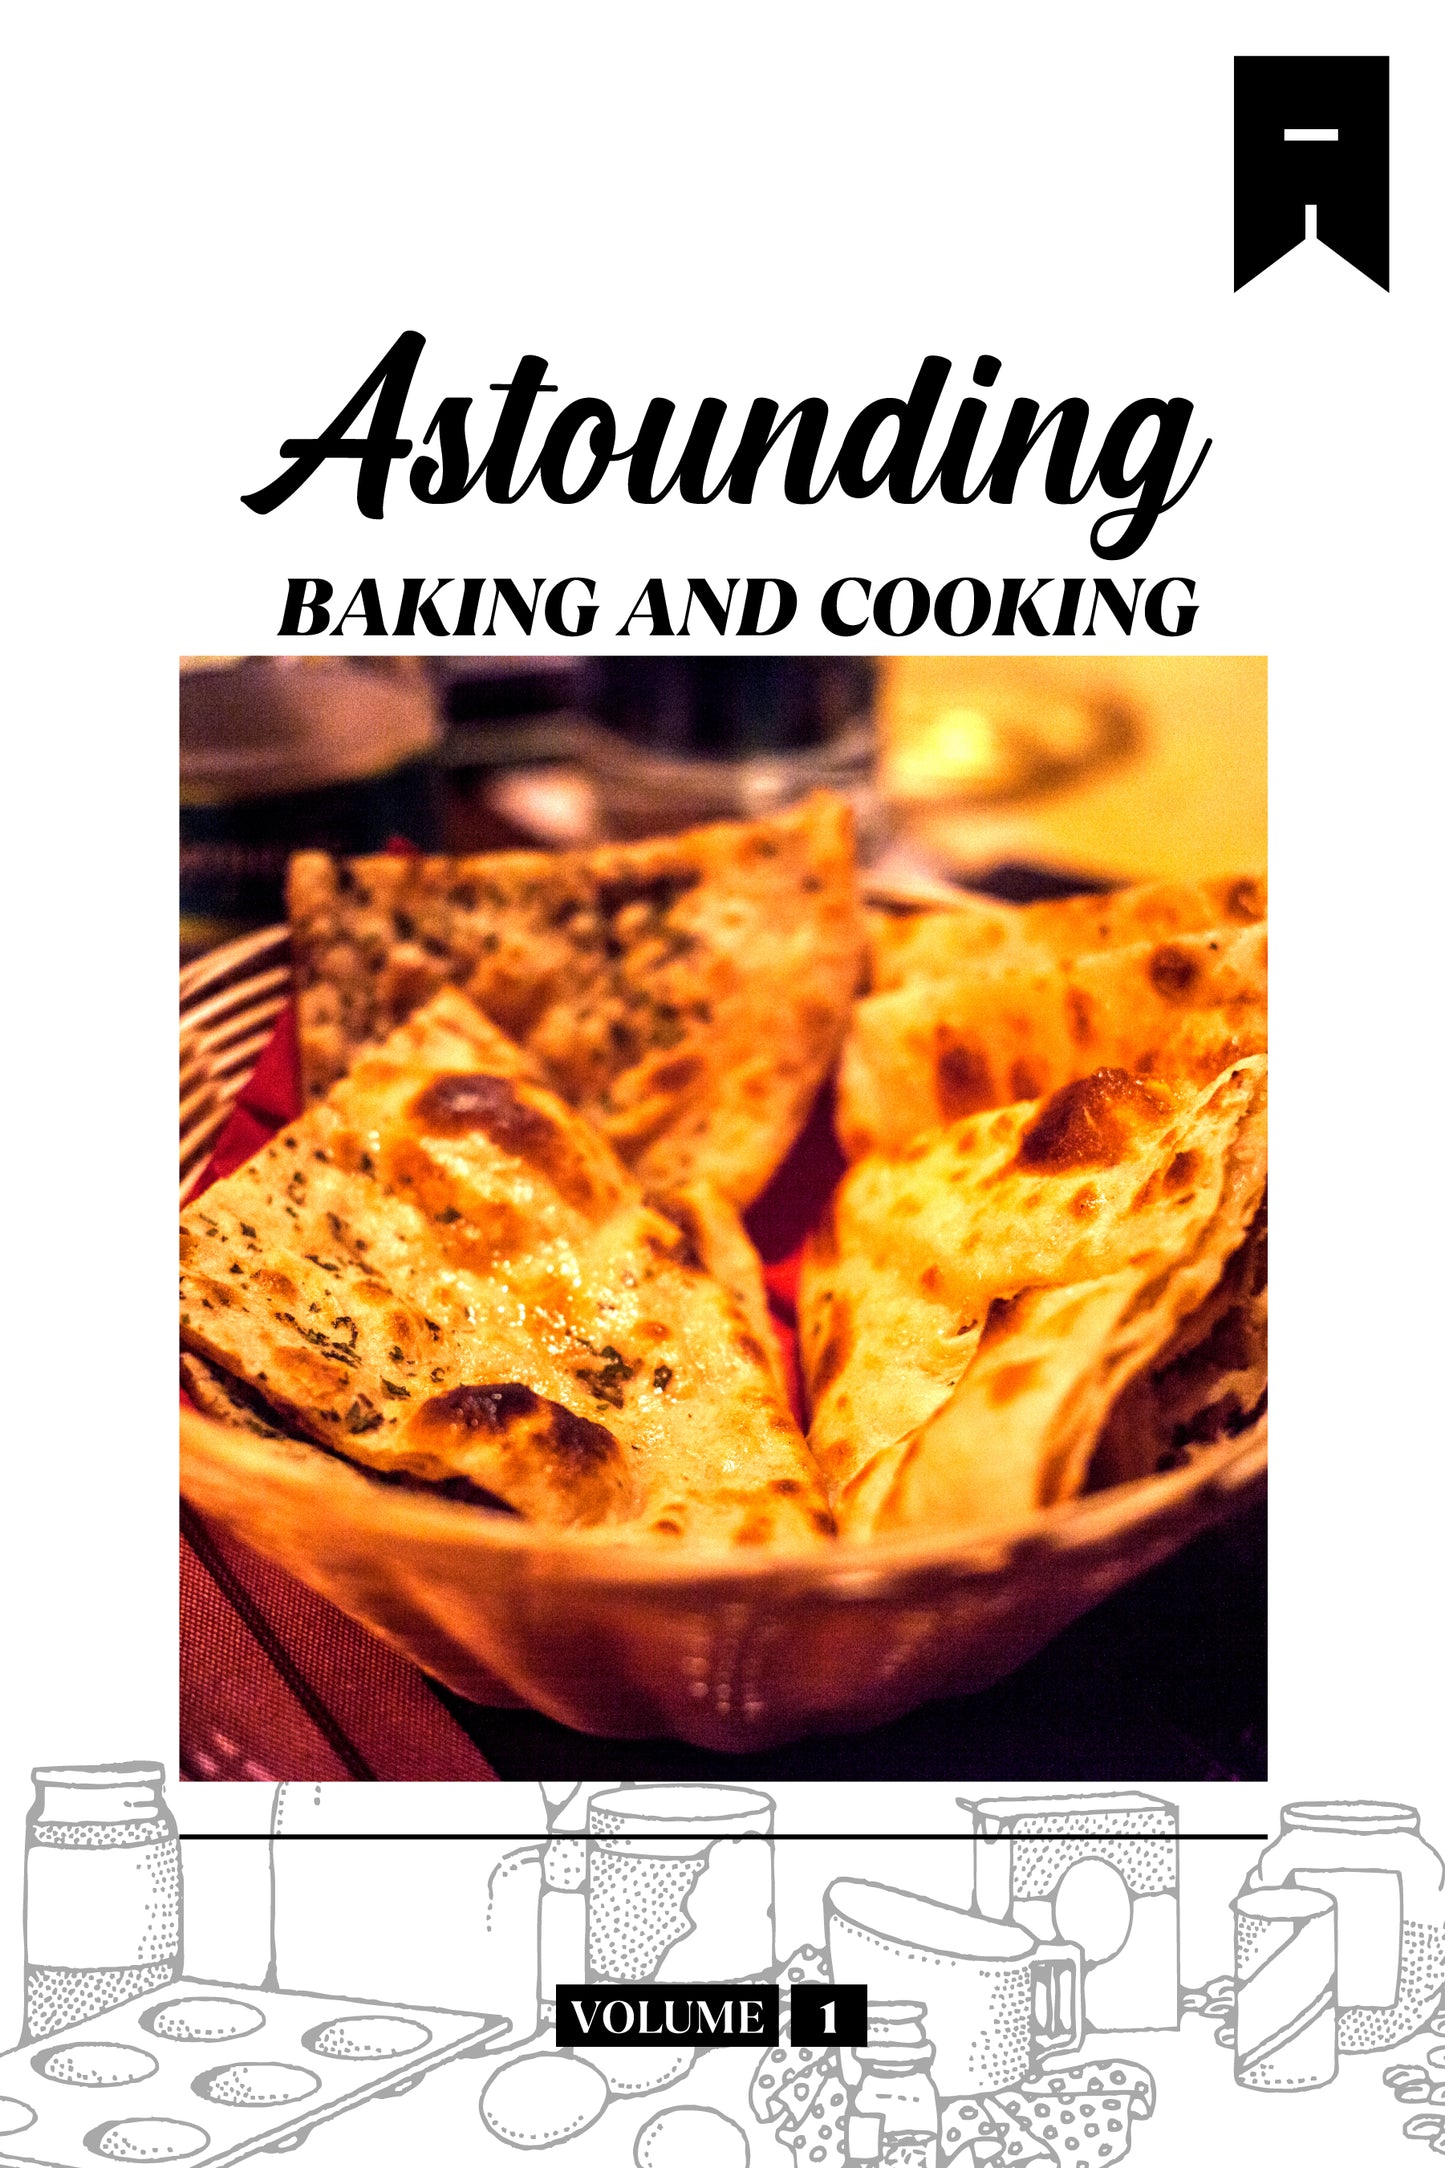 Astounding Baking (Volume 1) - Physical Book